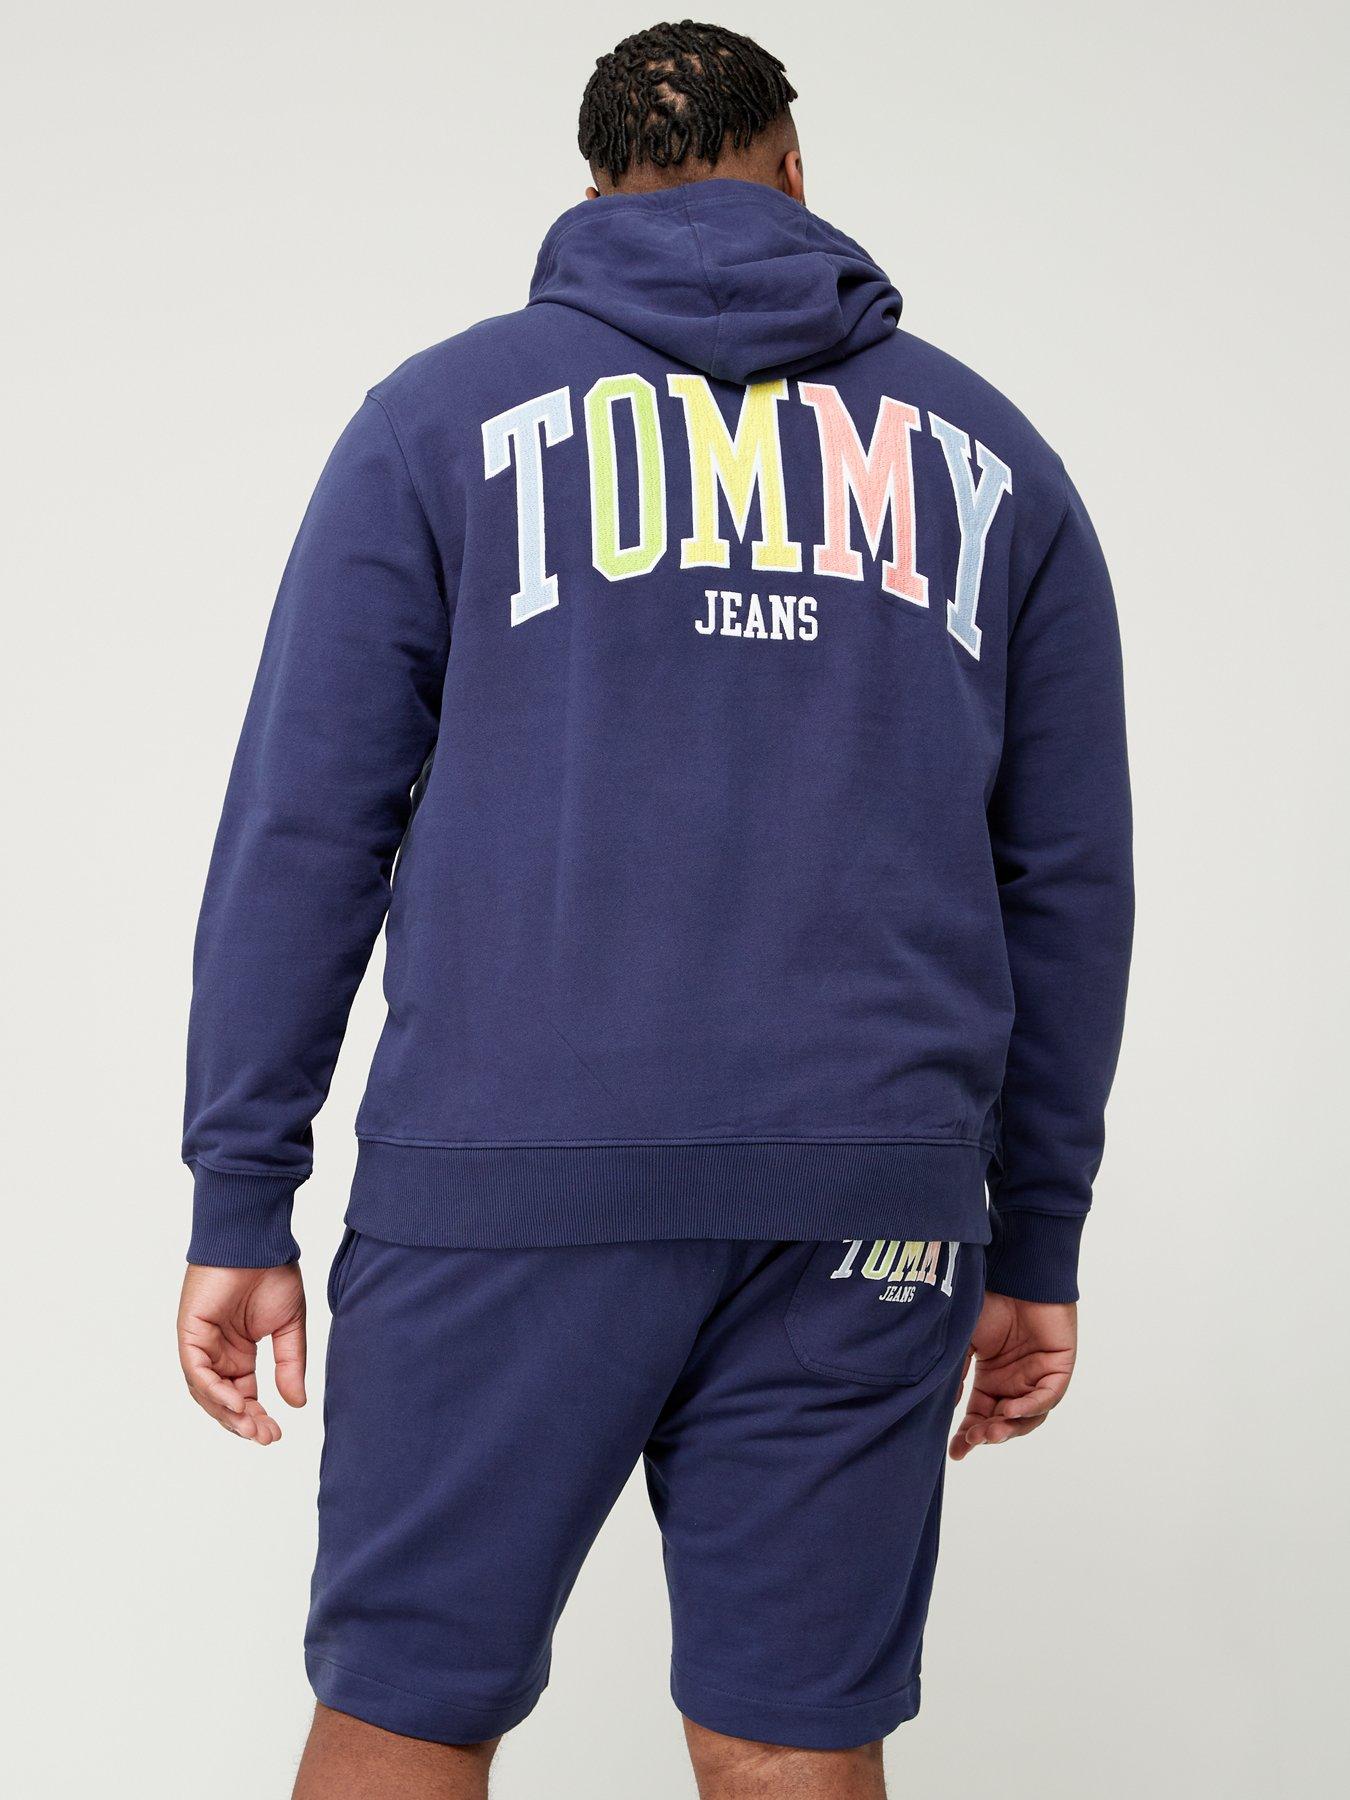 & | | Men Tommy Ireland 3XL Hoodies sweatshirts | | Very jeans